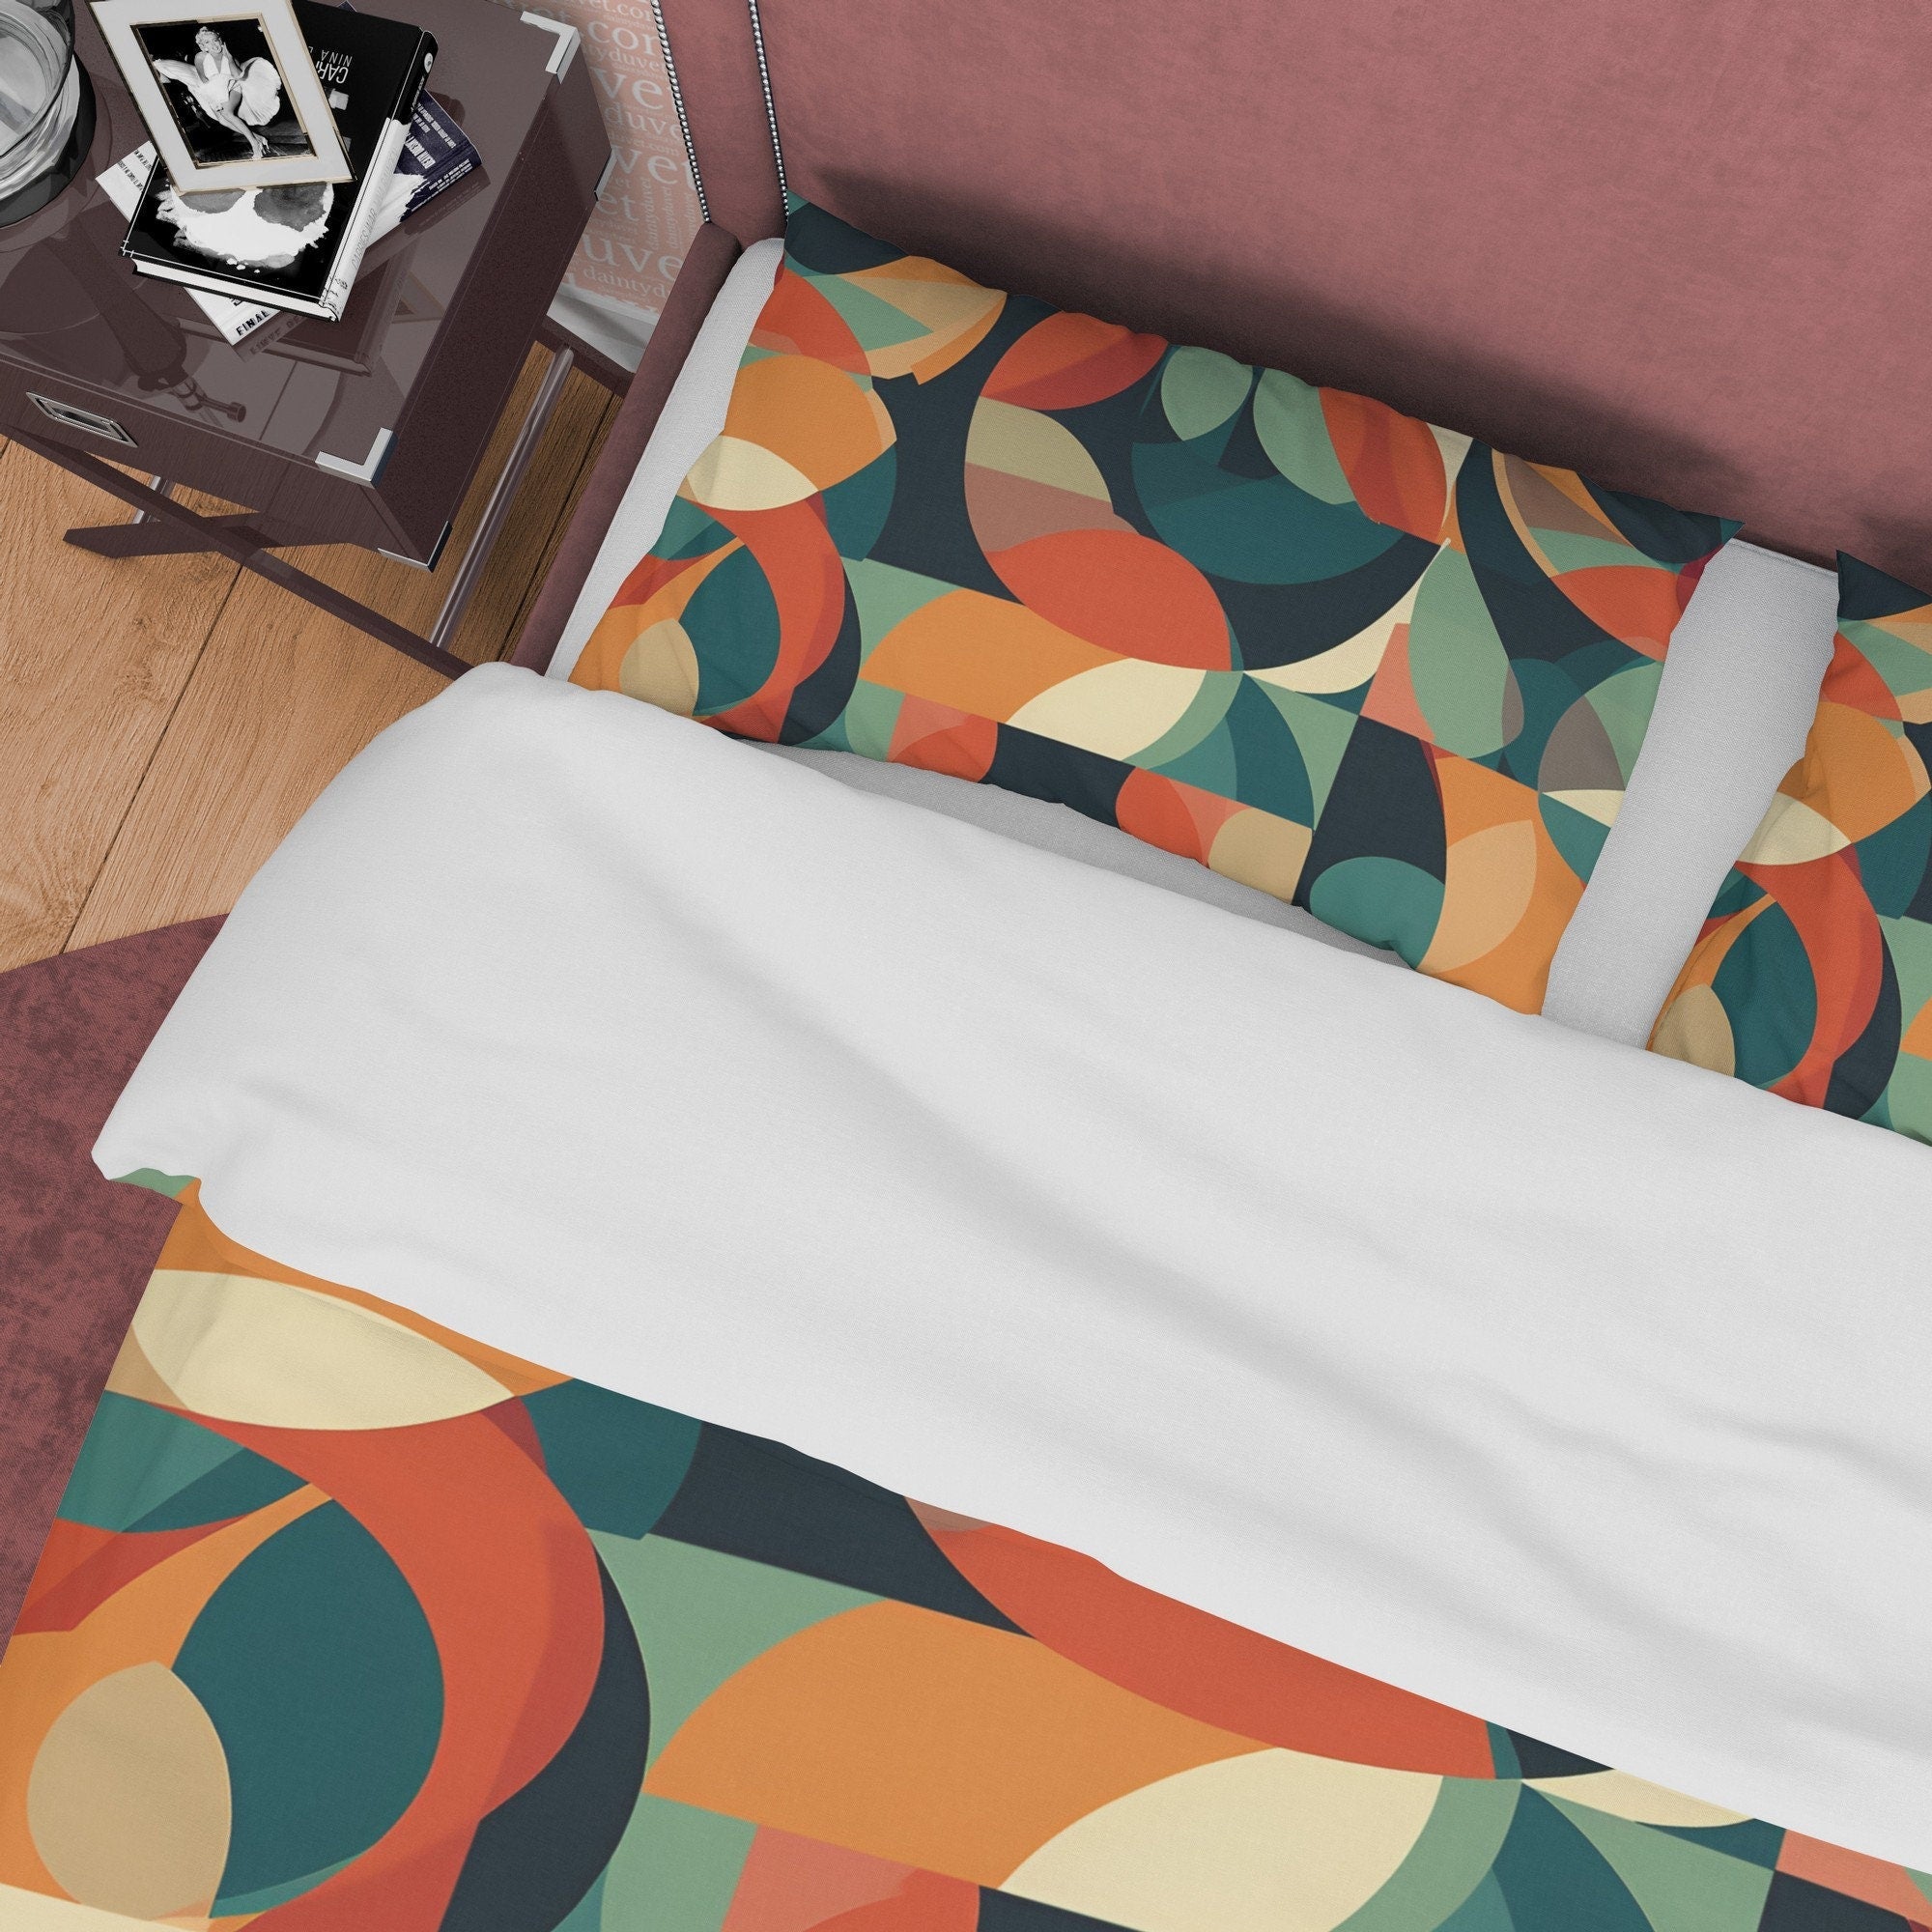 Geometric Cotton Duvet Cover, Retro Bedding Set, Abstract Botanical Color Quilt Cover, Unique Green Brown Vintage Bedspread, Zipper Bedding